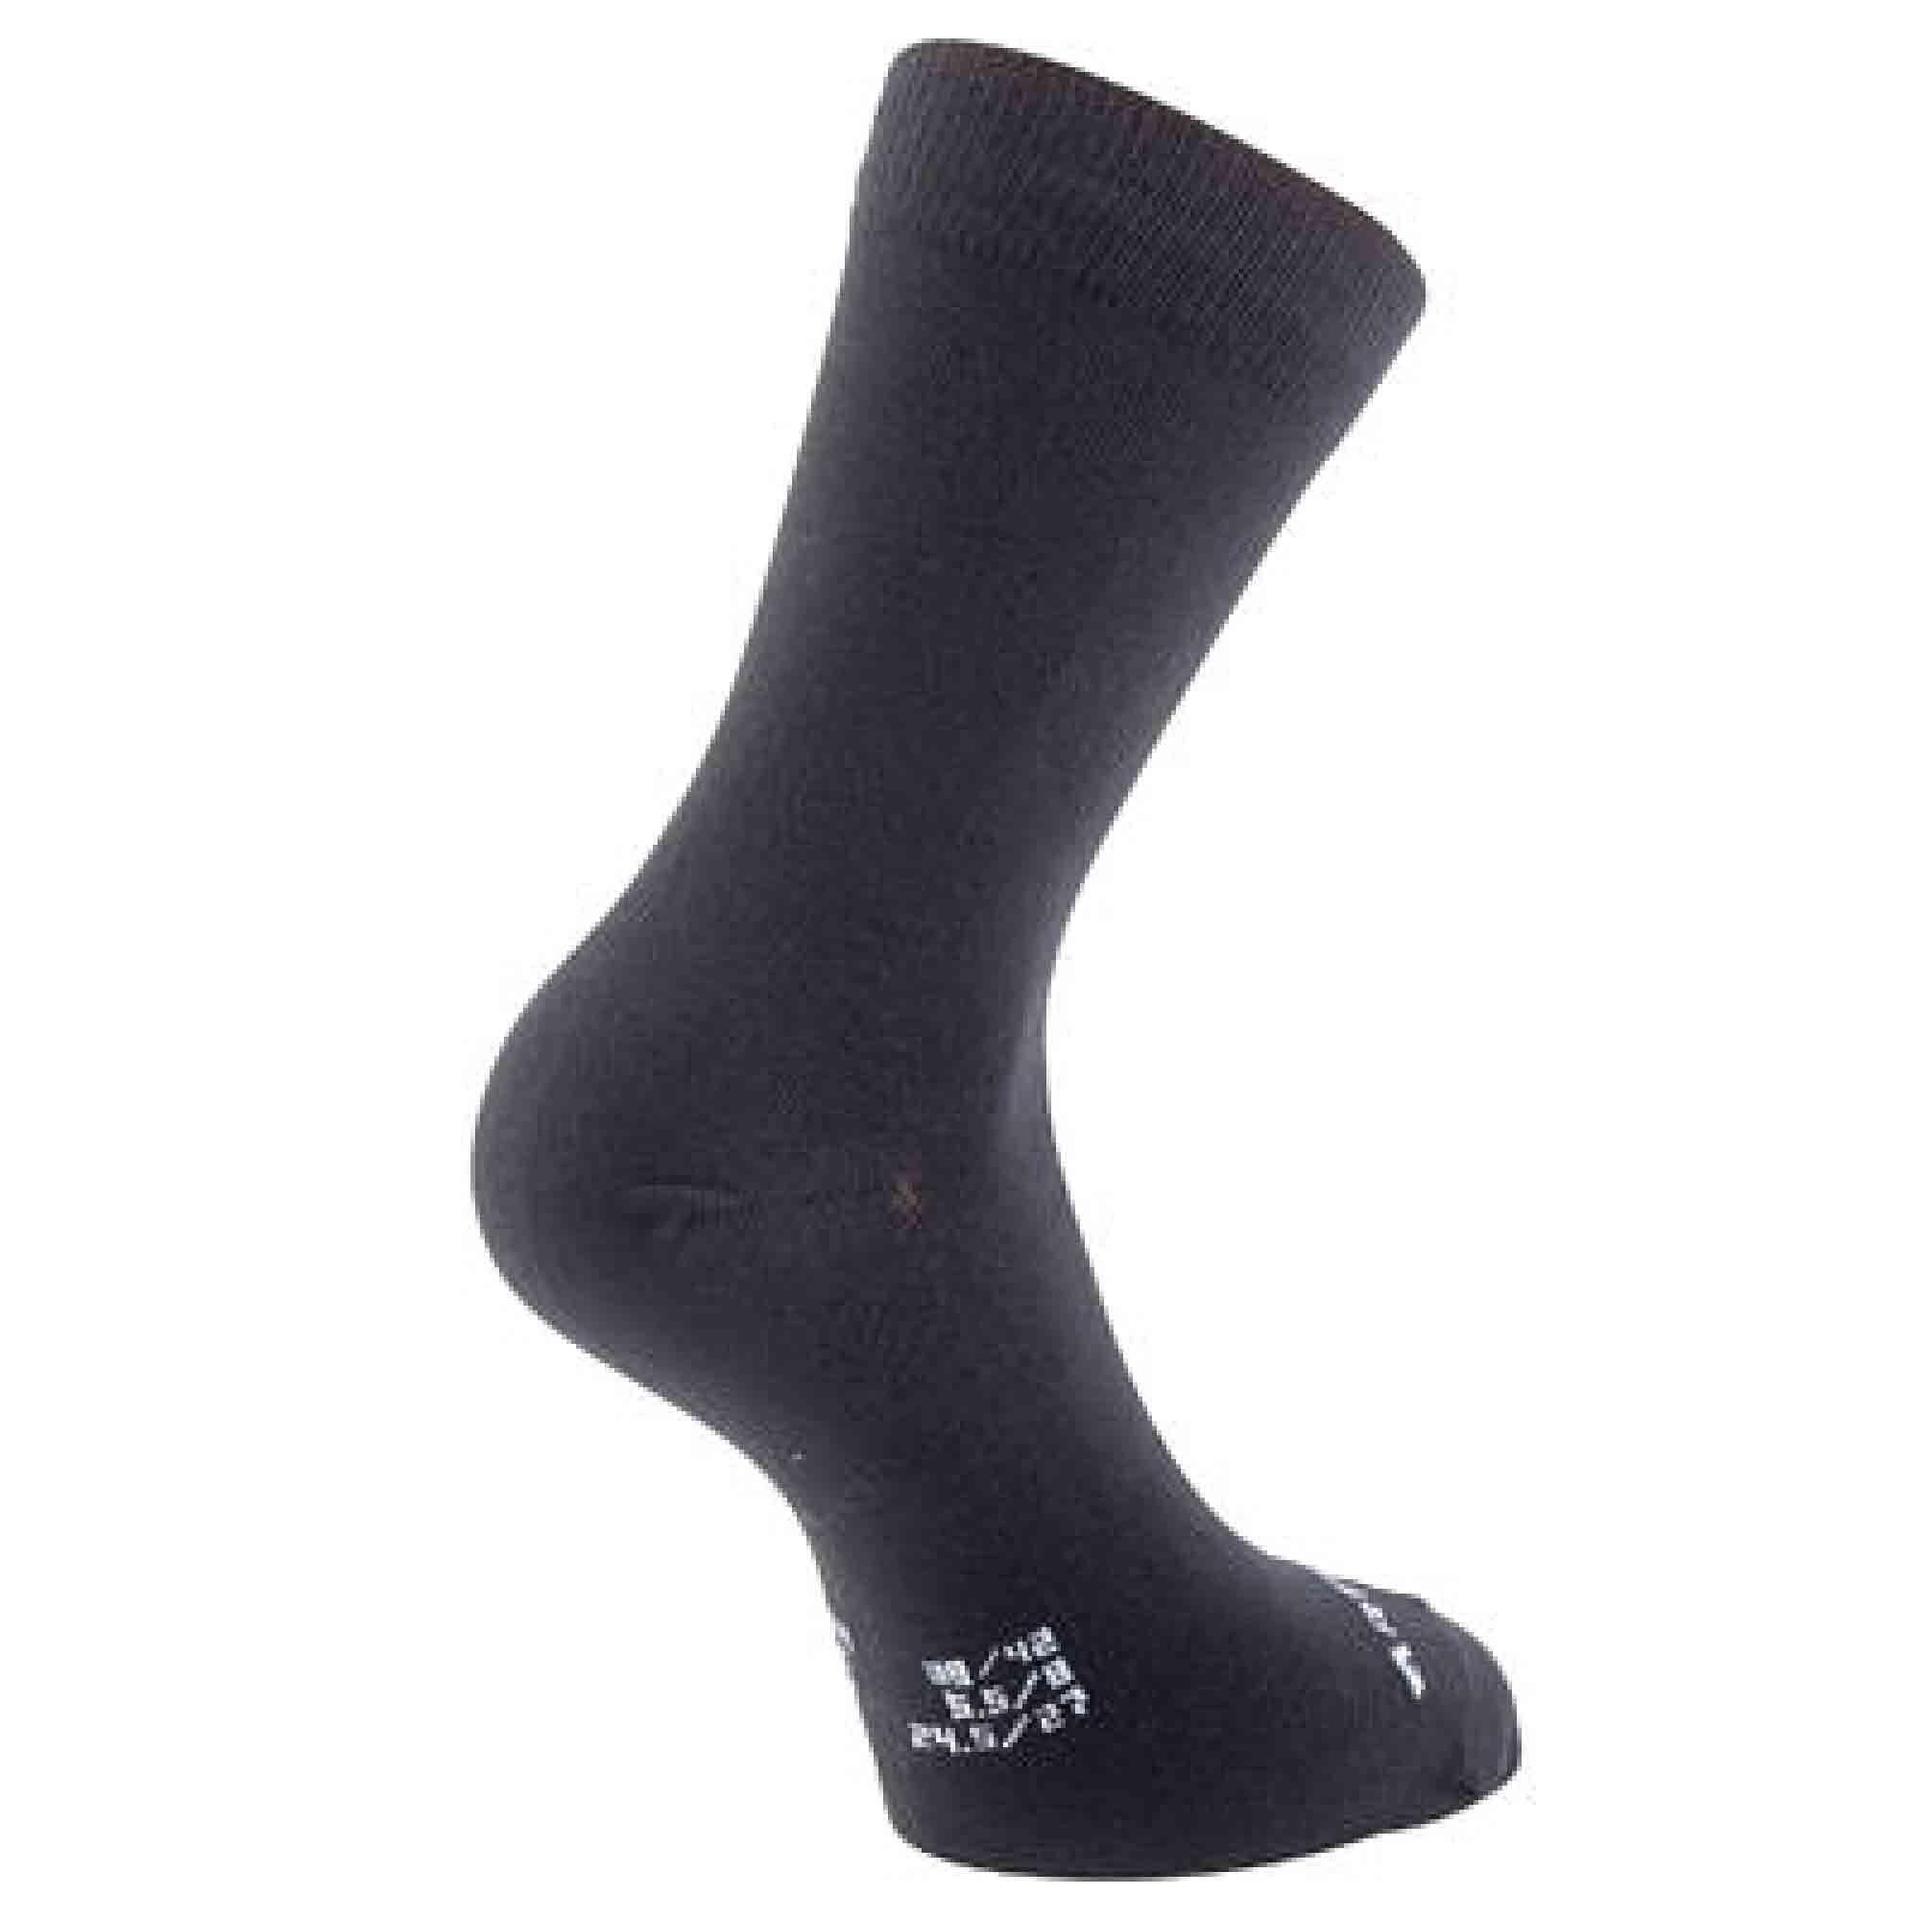 adult-tennis-socks-high-ankle-x1---rs160-black